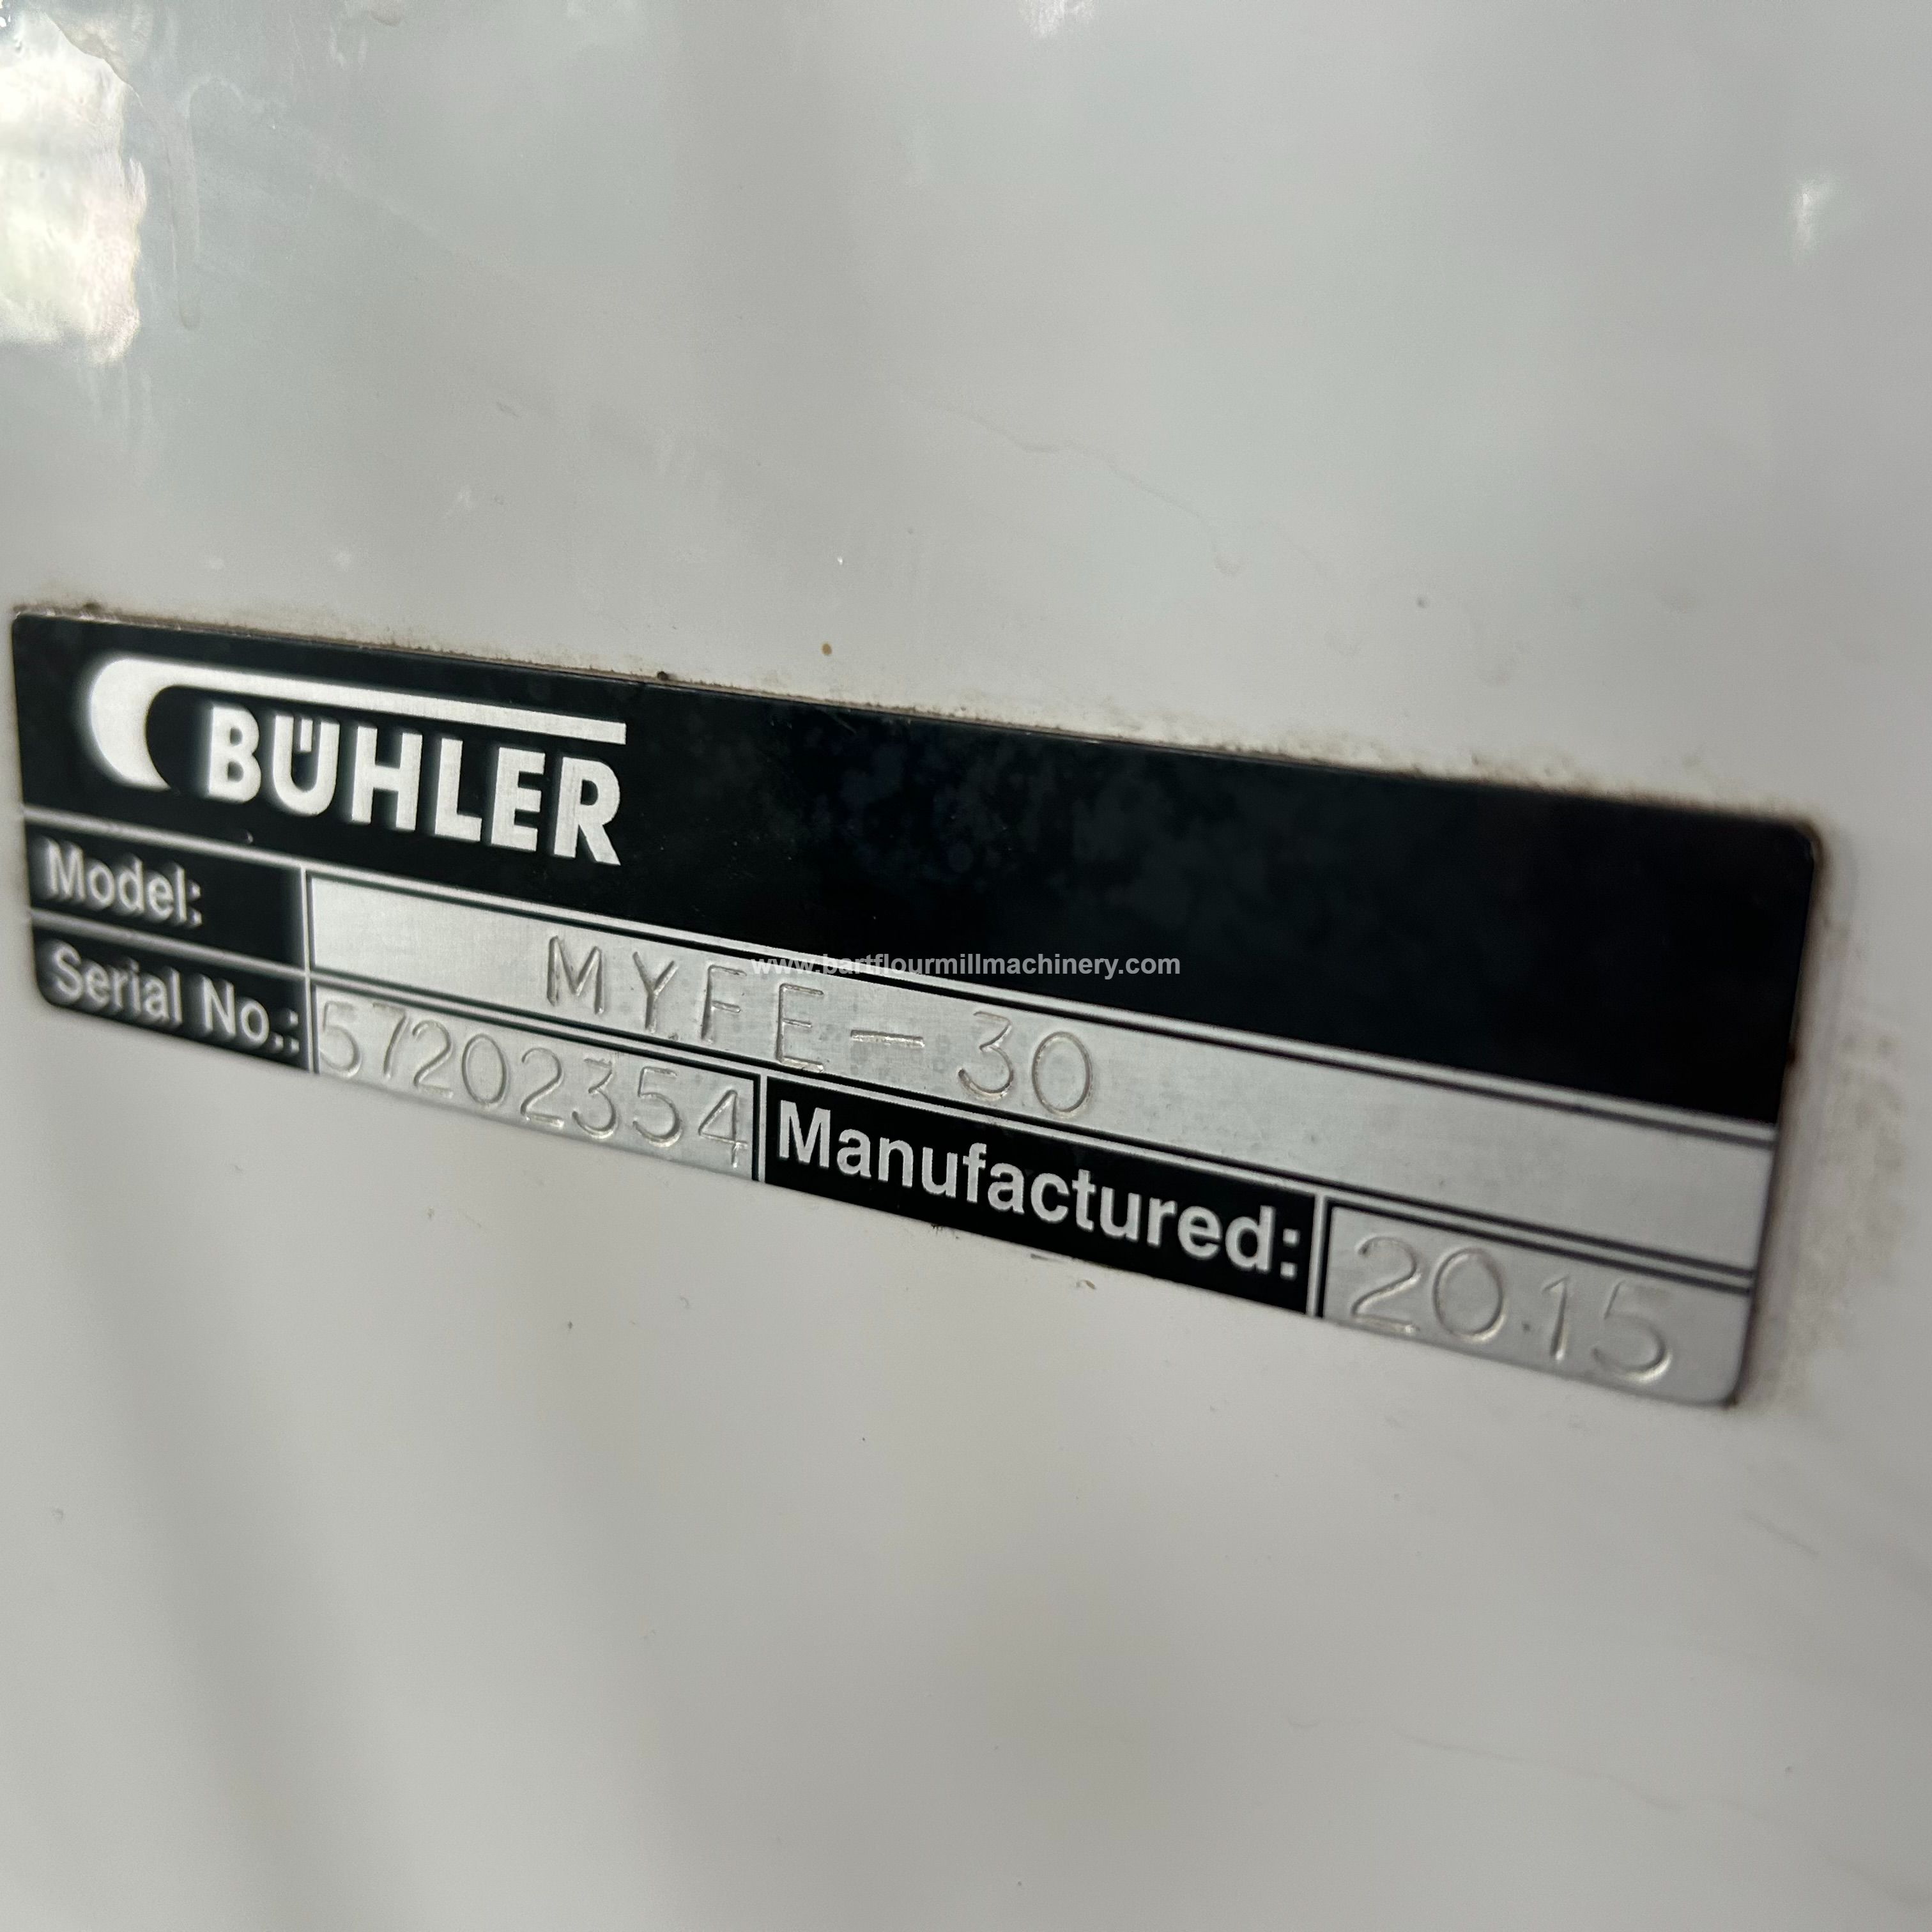 BUHLER Buhler moisture control machine MYFE-30 for Mill Plant